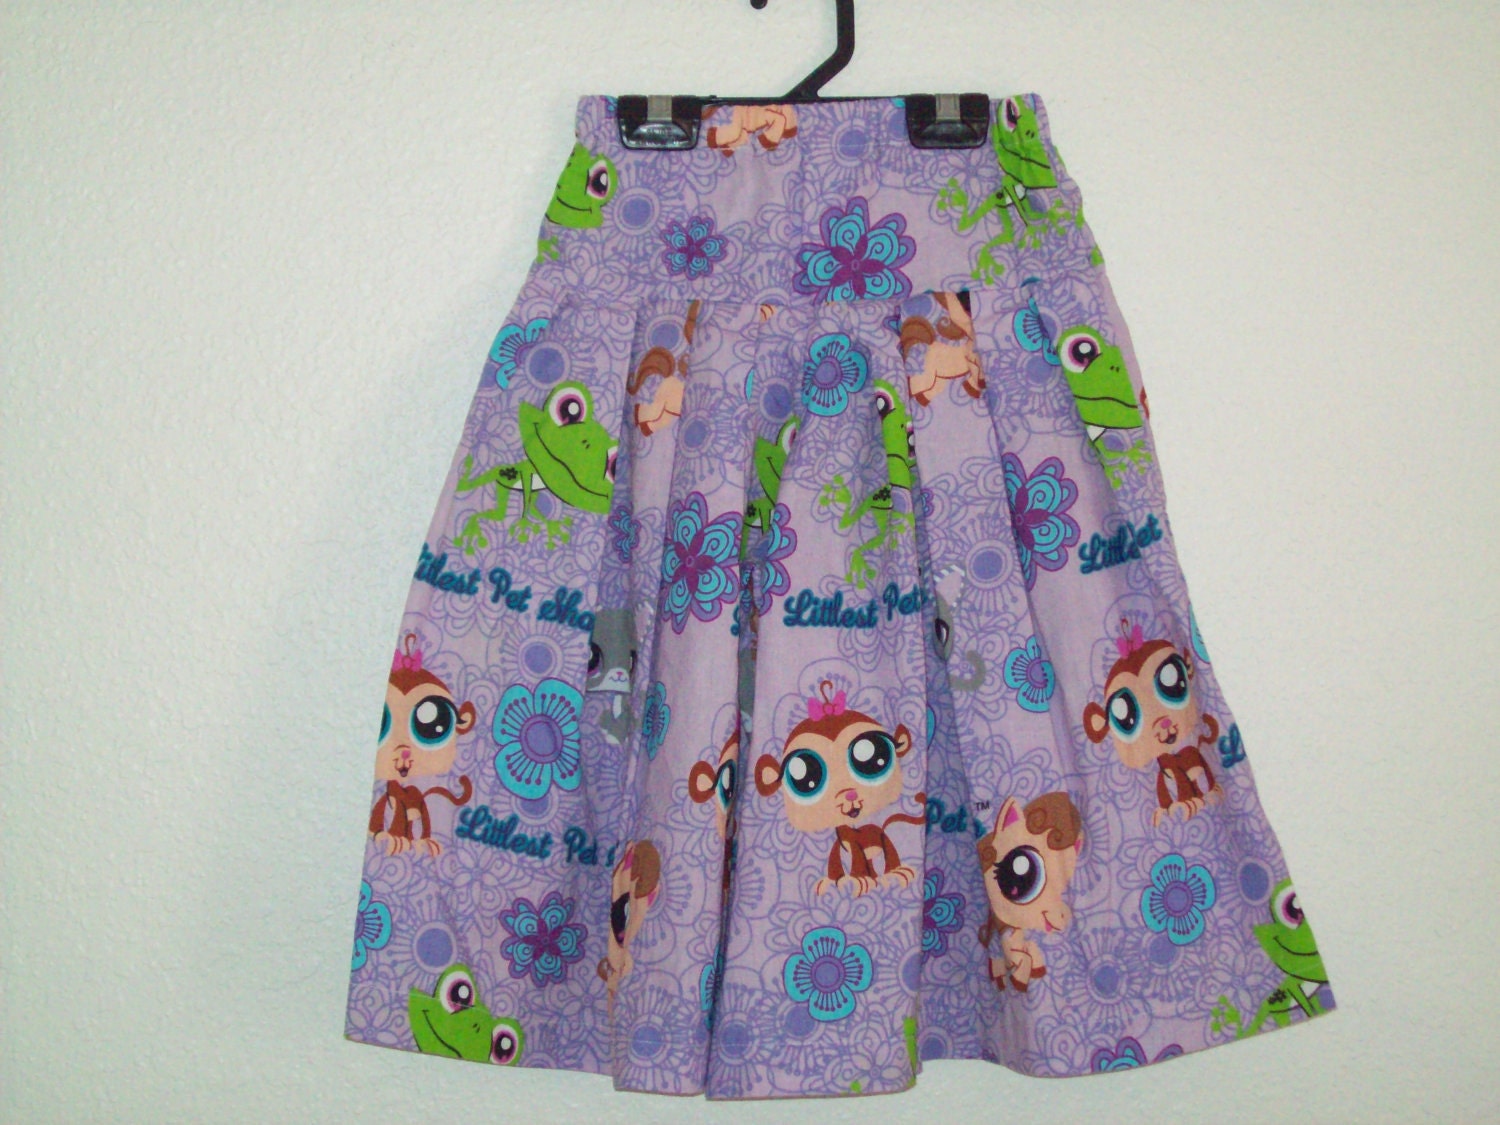 Culottes Modest Split Skirt Littlest Pet Shop Print Size 6